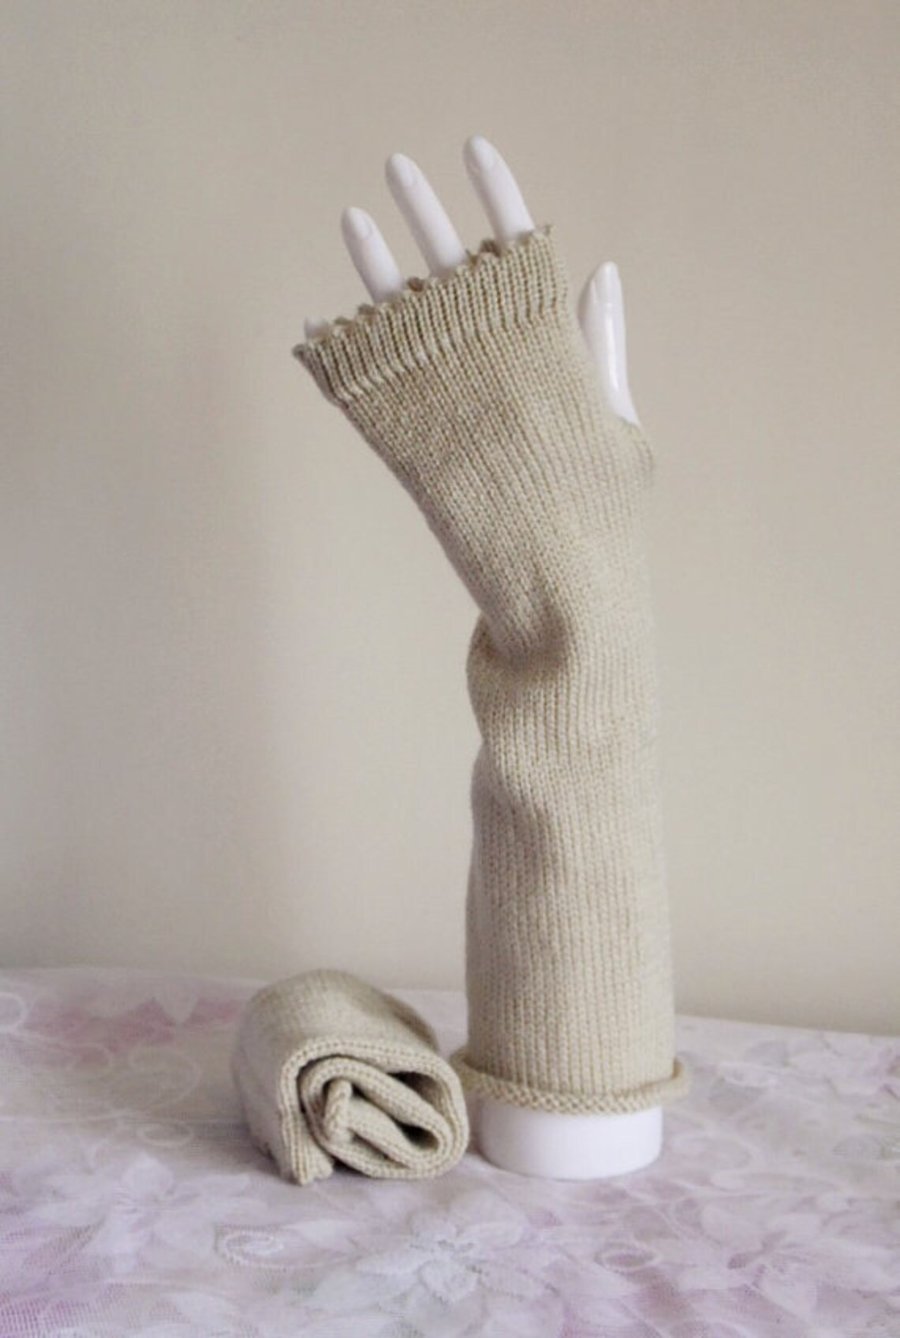 Handmade hand warmers for women, wrist warmers, fingerless gloves